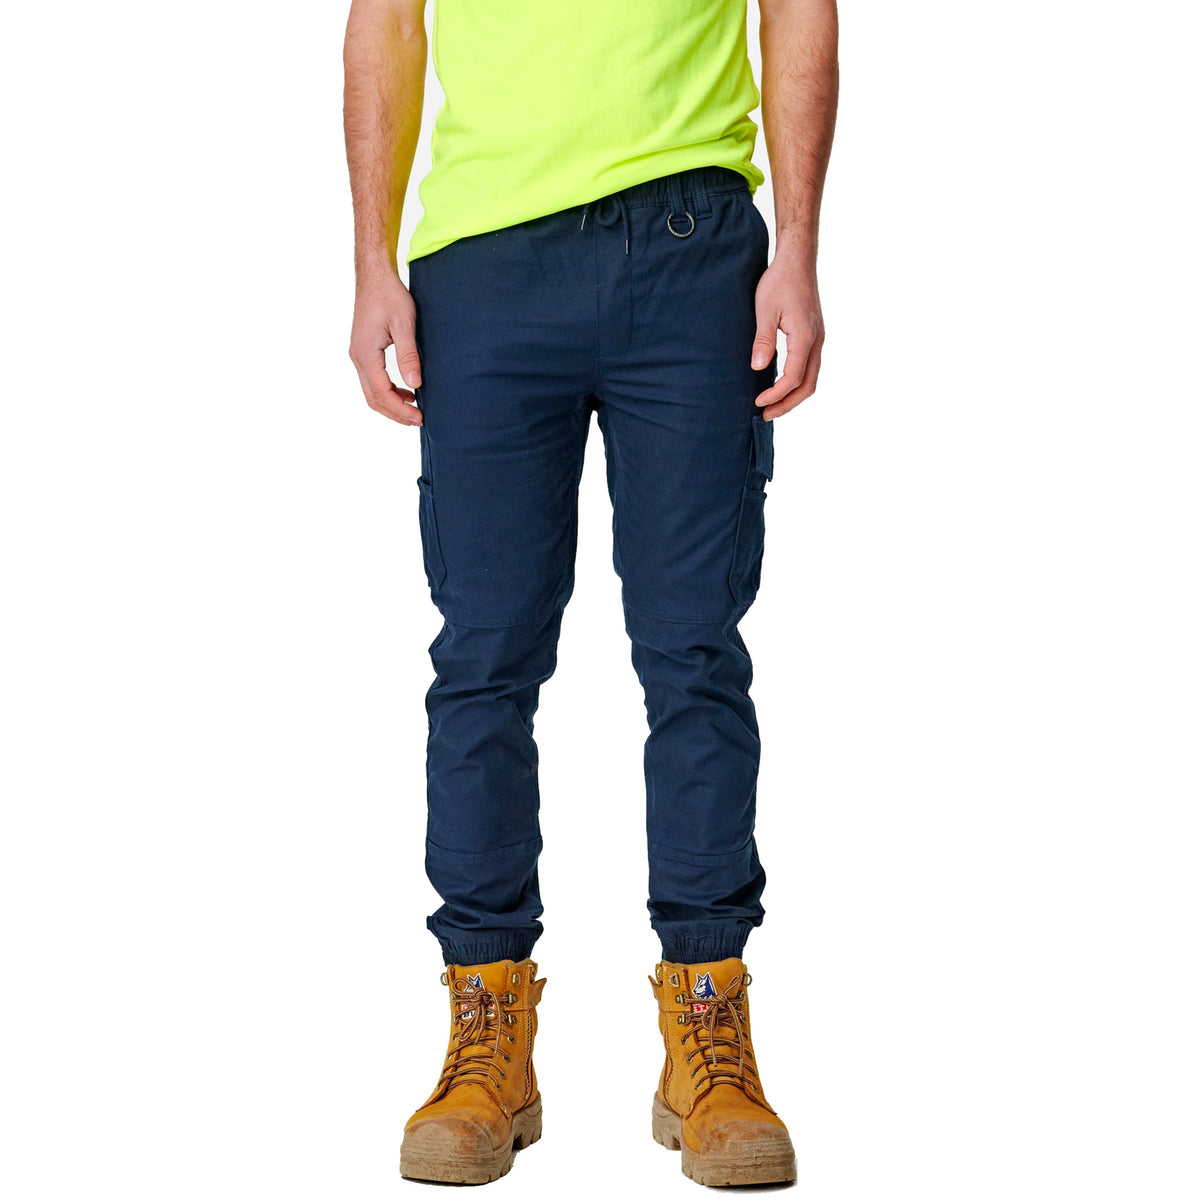 JB.CARGO PANT FIR Cargo pants - Boy - Diadora Online Store